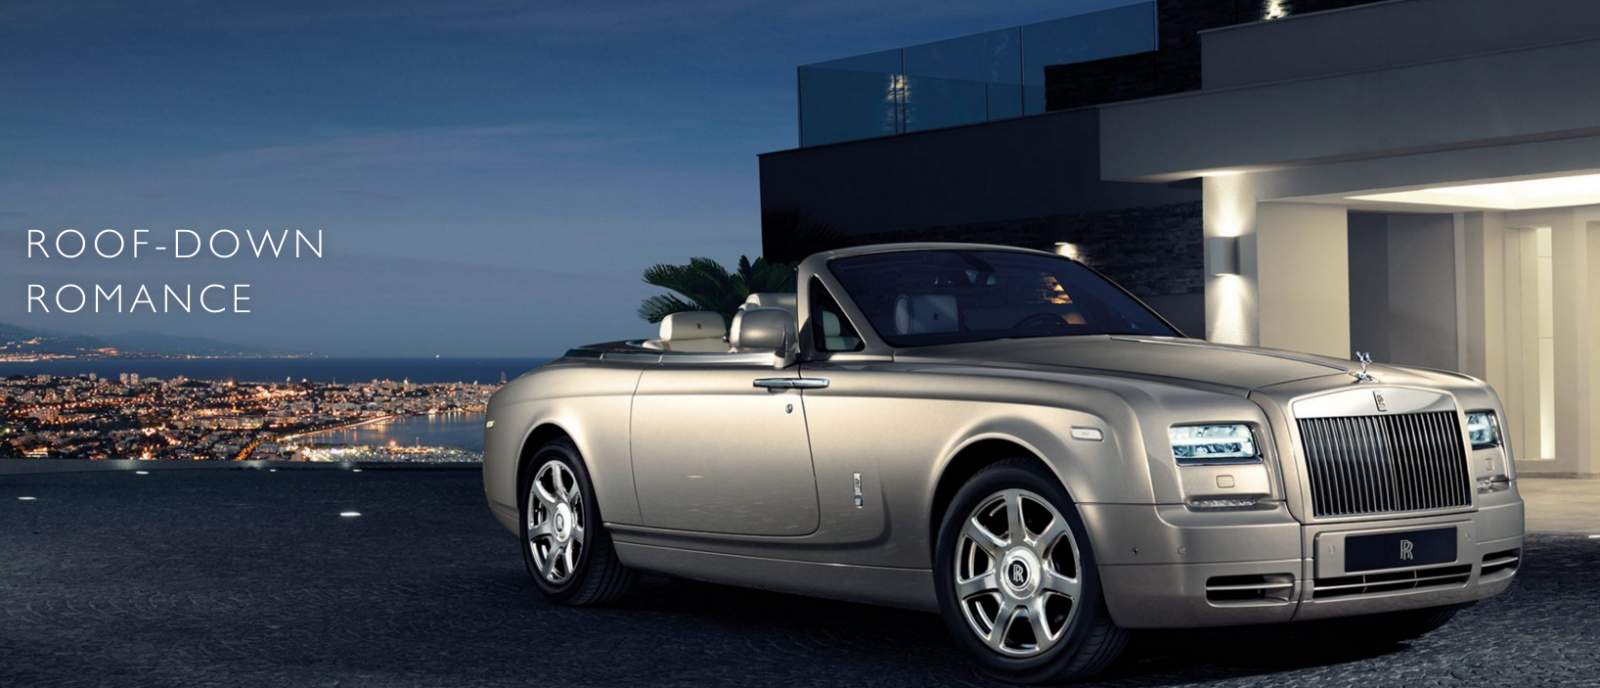 Rolls-Royce Phantom Coupé - Wikipedia